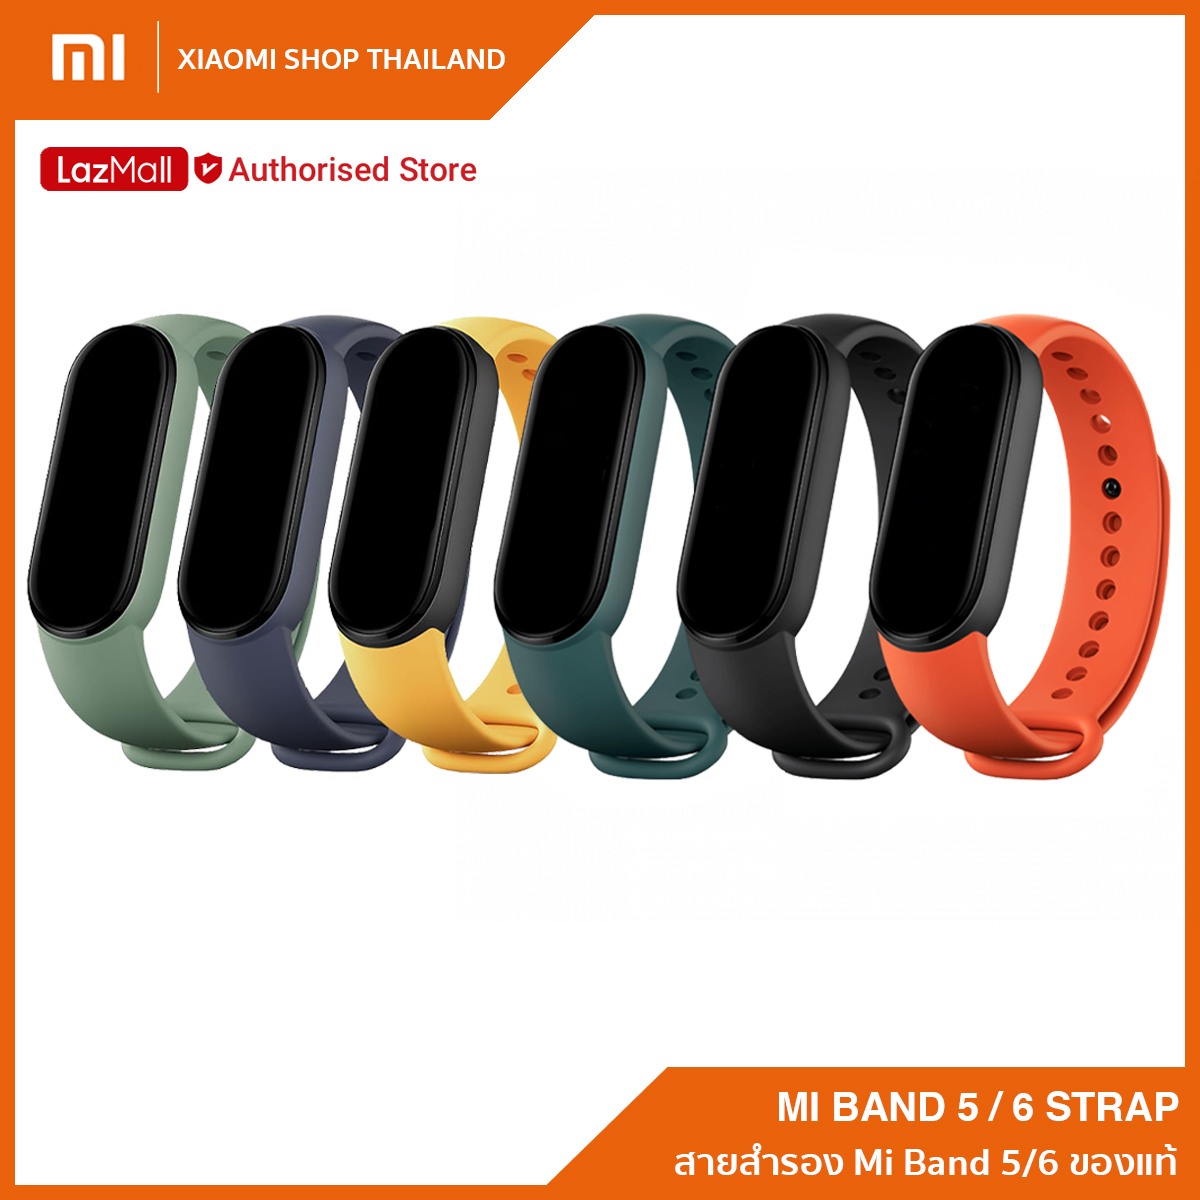 Mi Band 5/6 Strap Original สายสำหรับเปลี่นรุ่น Mi Band 5 และ Mi Band 6 ของแท้ 100%